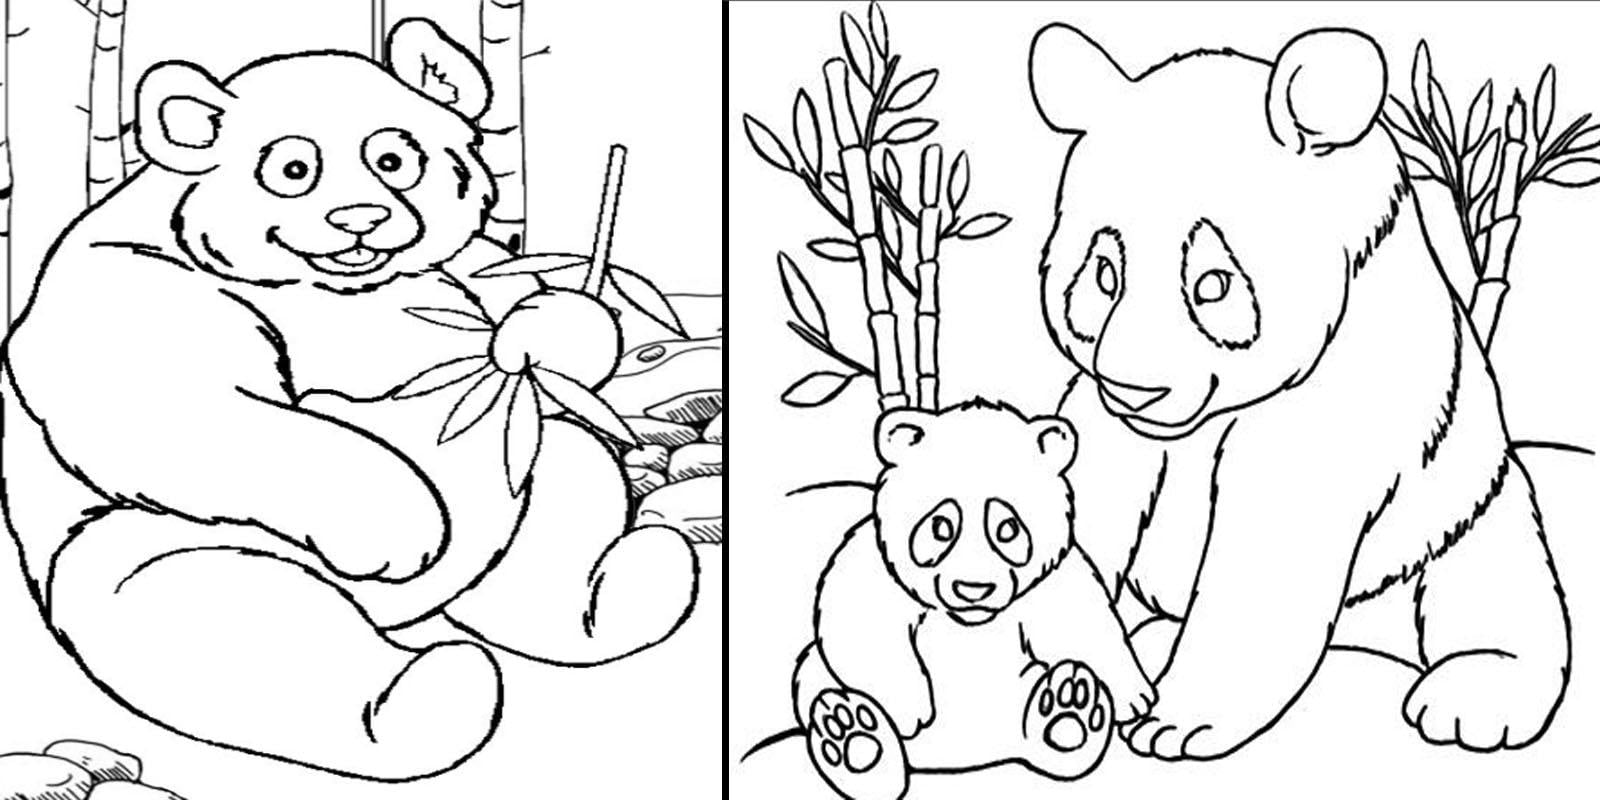 Featured image of post Kawaii Panda Kawaii Desenhos Para Desenhar Facil E Bonito Como desenhar um panda kawaii super f cilcomo desenhar urso panda fofo e f cil kawaiicomo desenhar urso panda fofo bonito e f cil desenhos bonitos